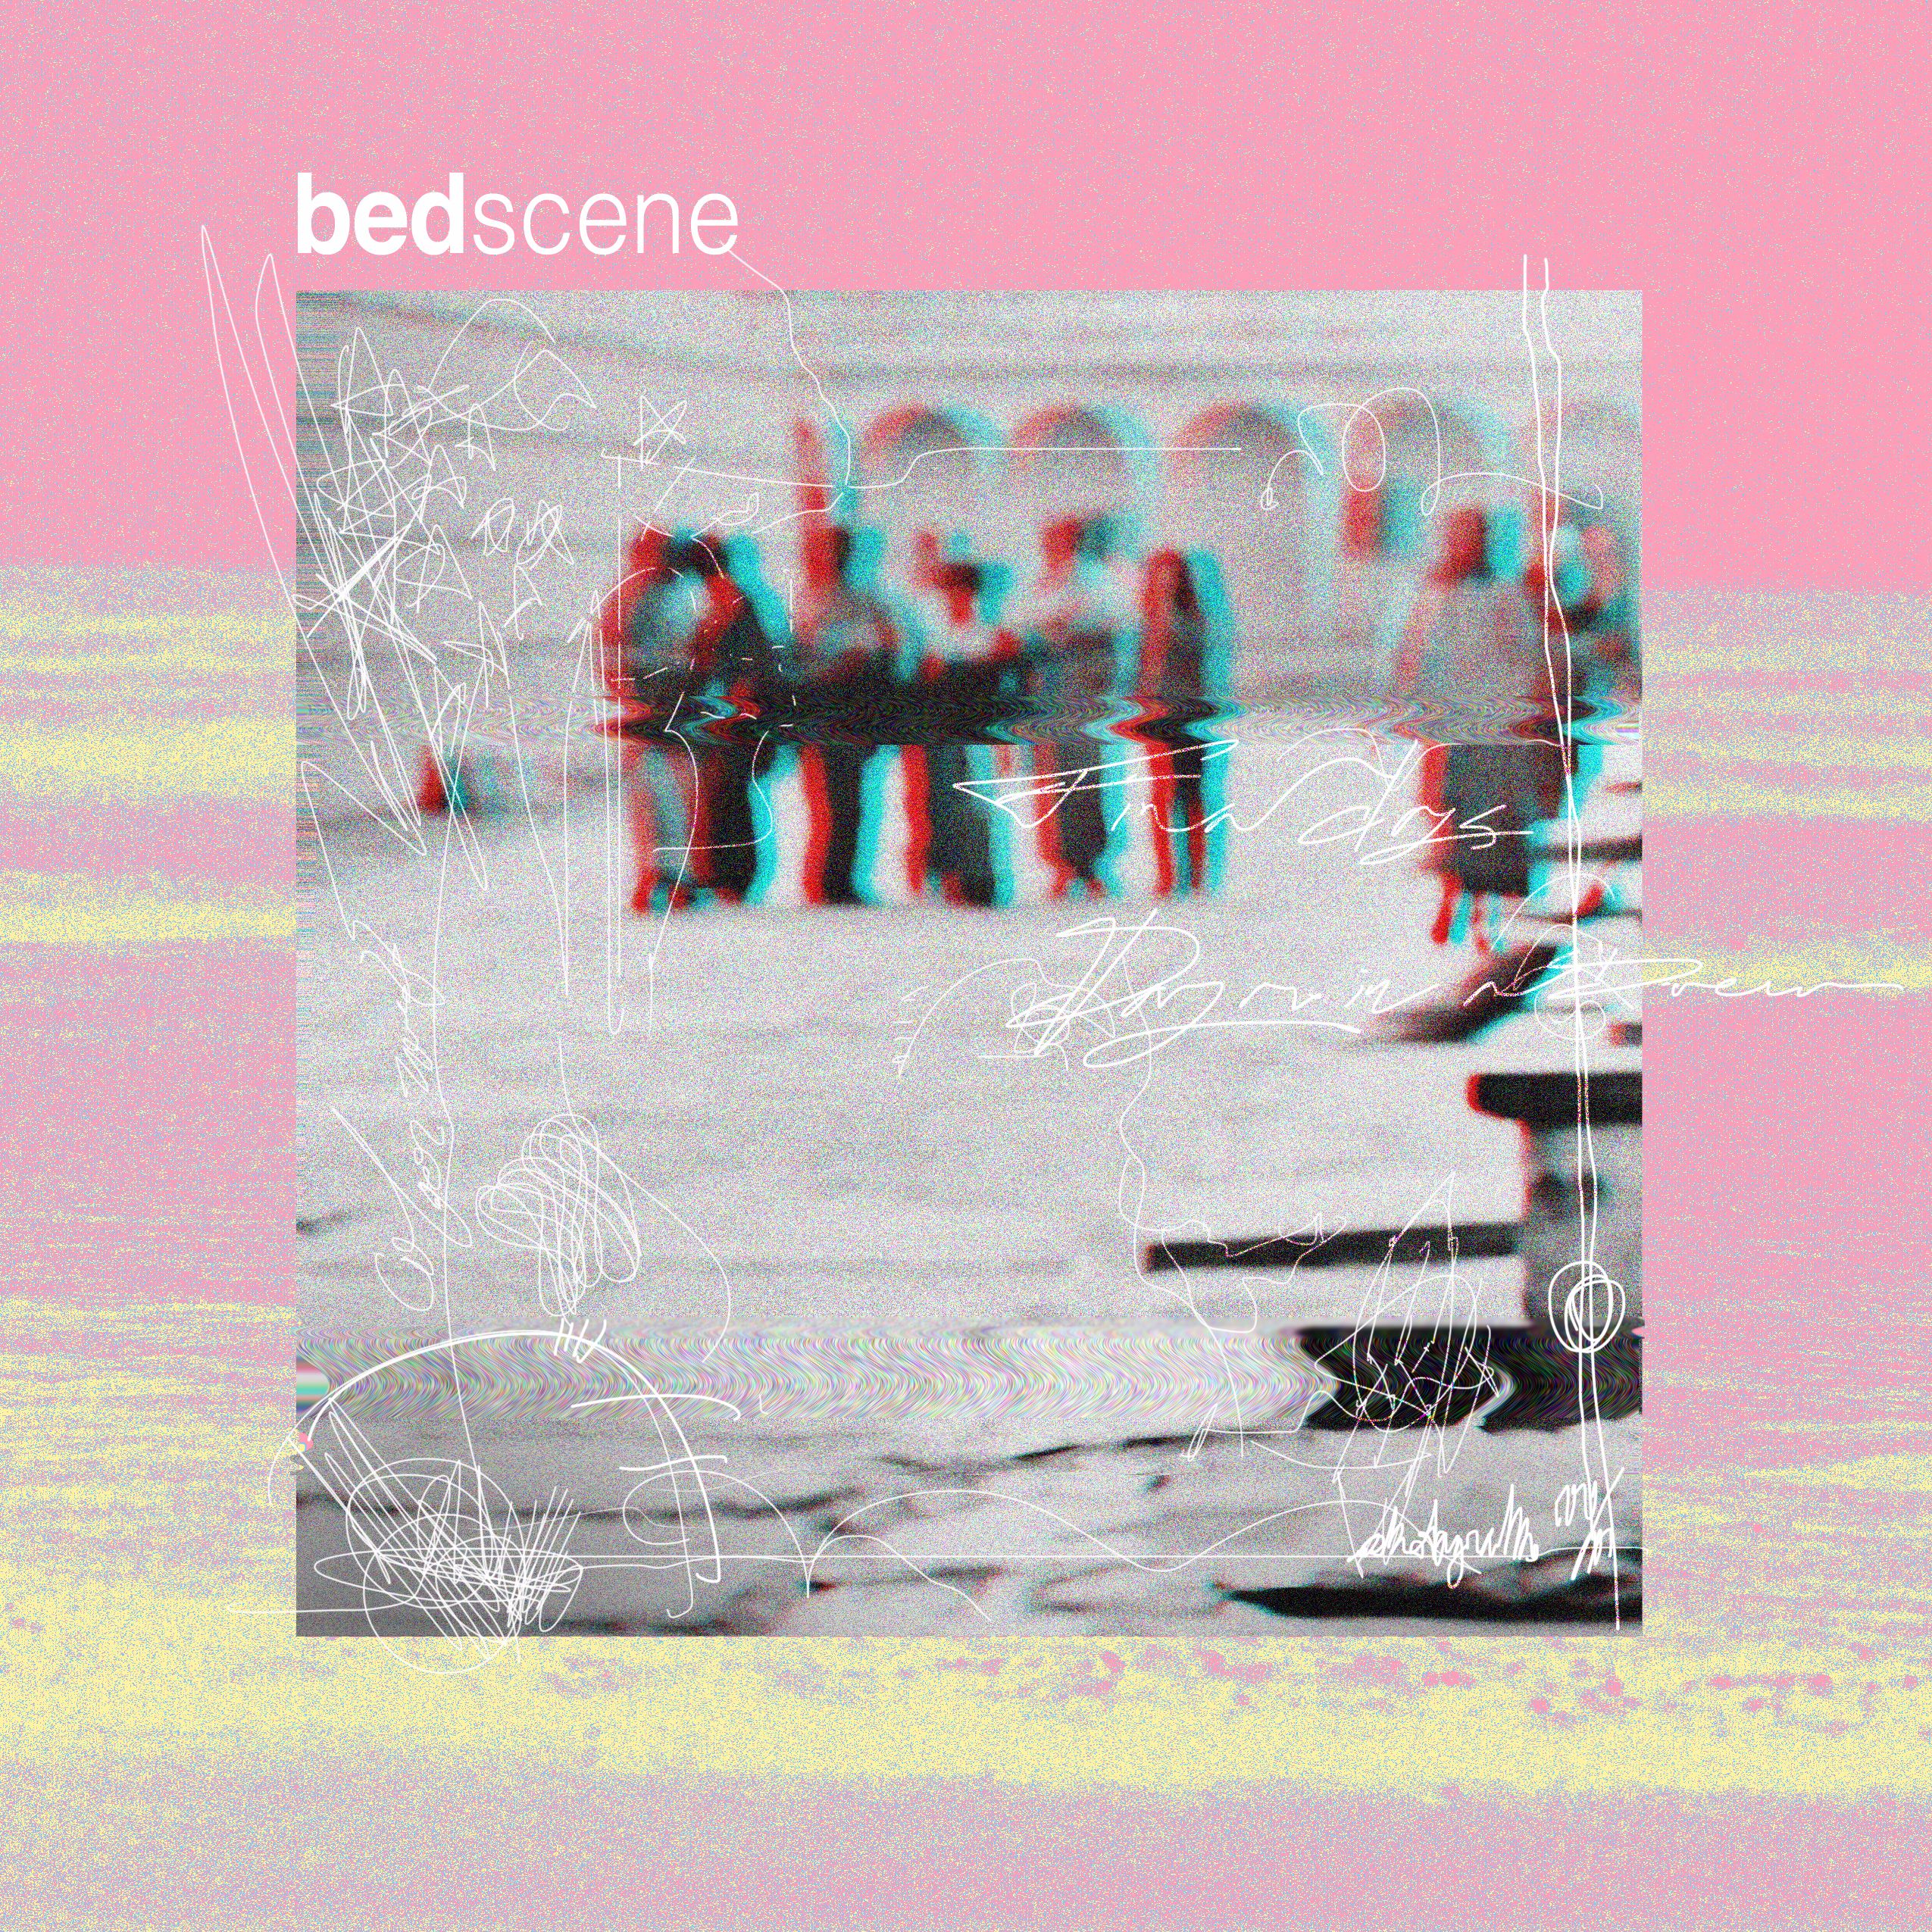 Bed Scene – “Videocassette”